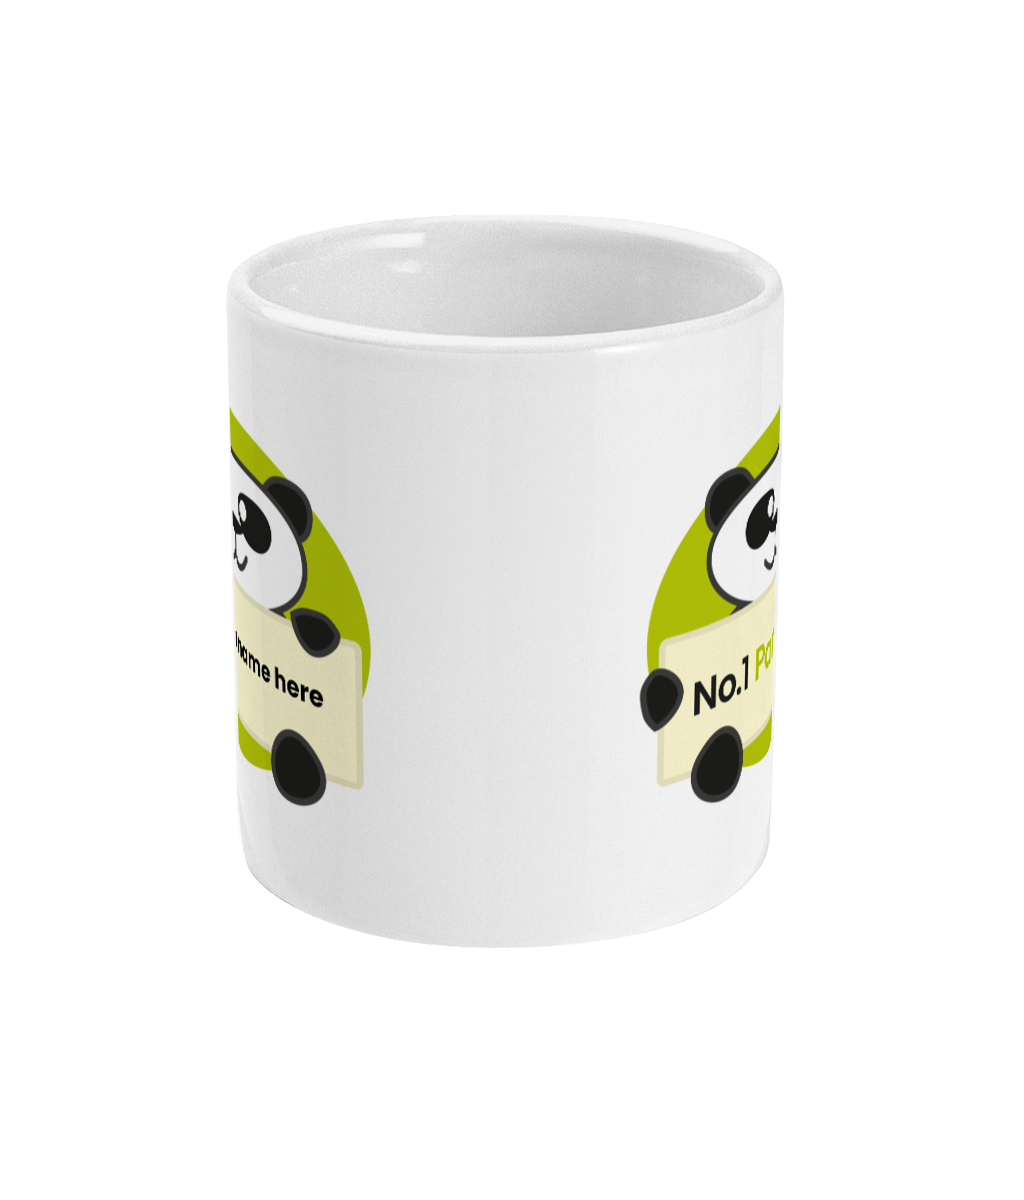 11oz Mug Personalised Panda Mug, Birthday Panda Mug, Panda Lover Gift, Cute Panda Mug, Custom Kids Mug, Hot Chocolate Mug